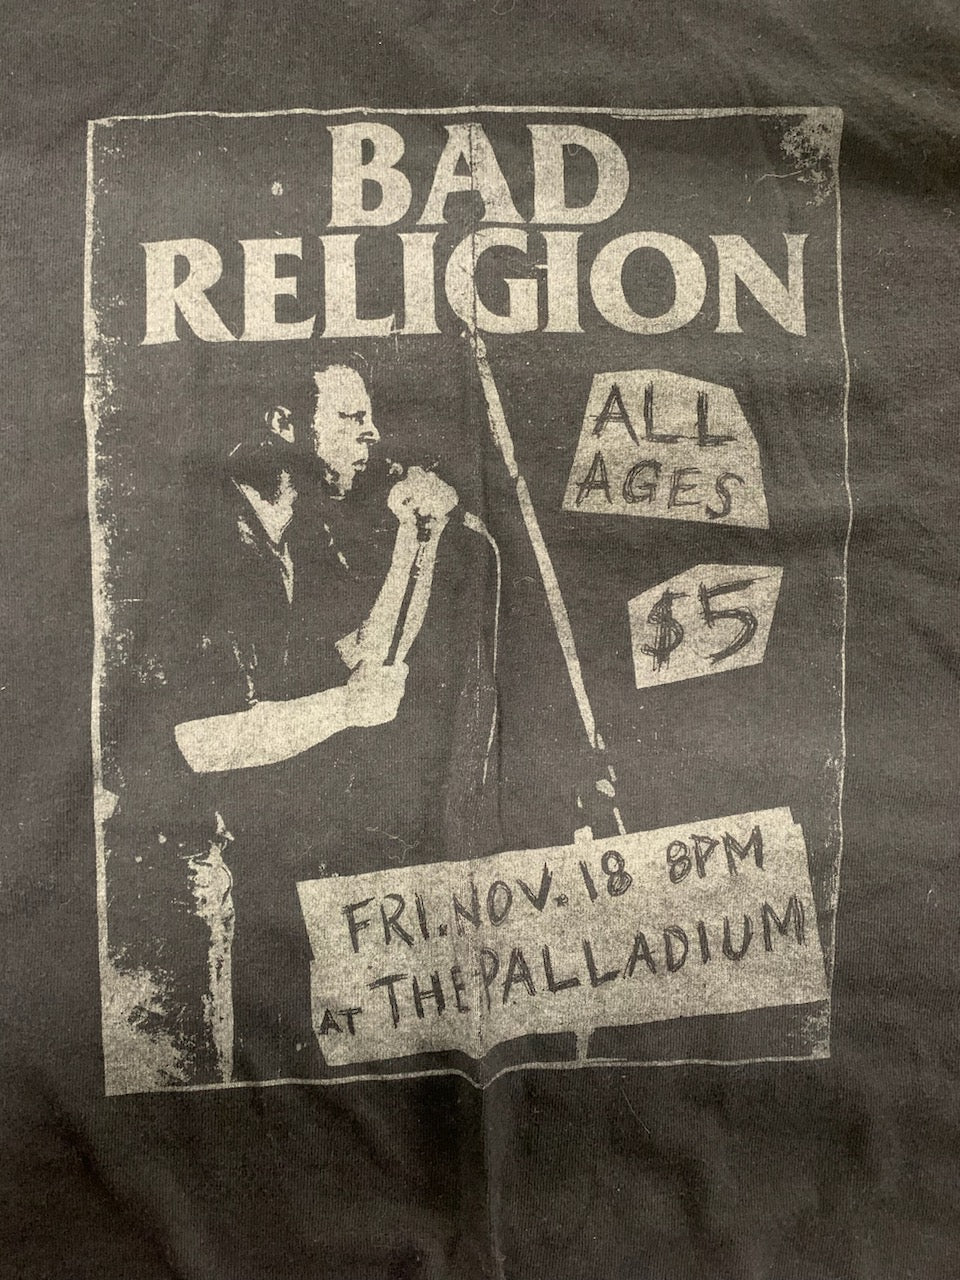 Bad Religion Palladium Nov. 18 T-Shirt, Black, M